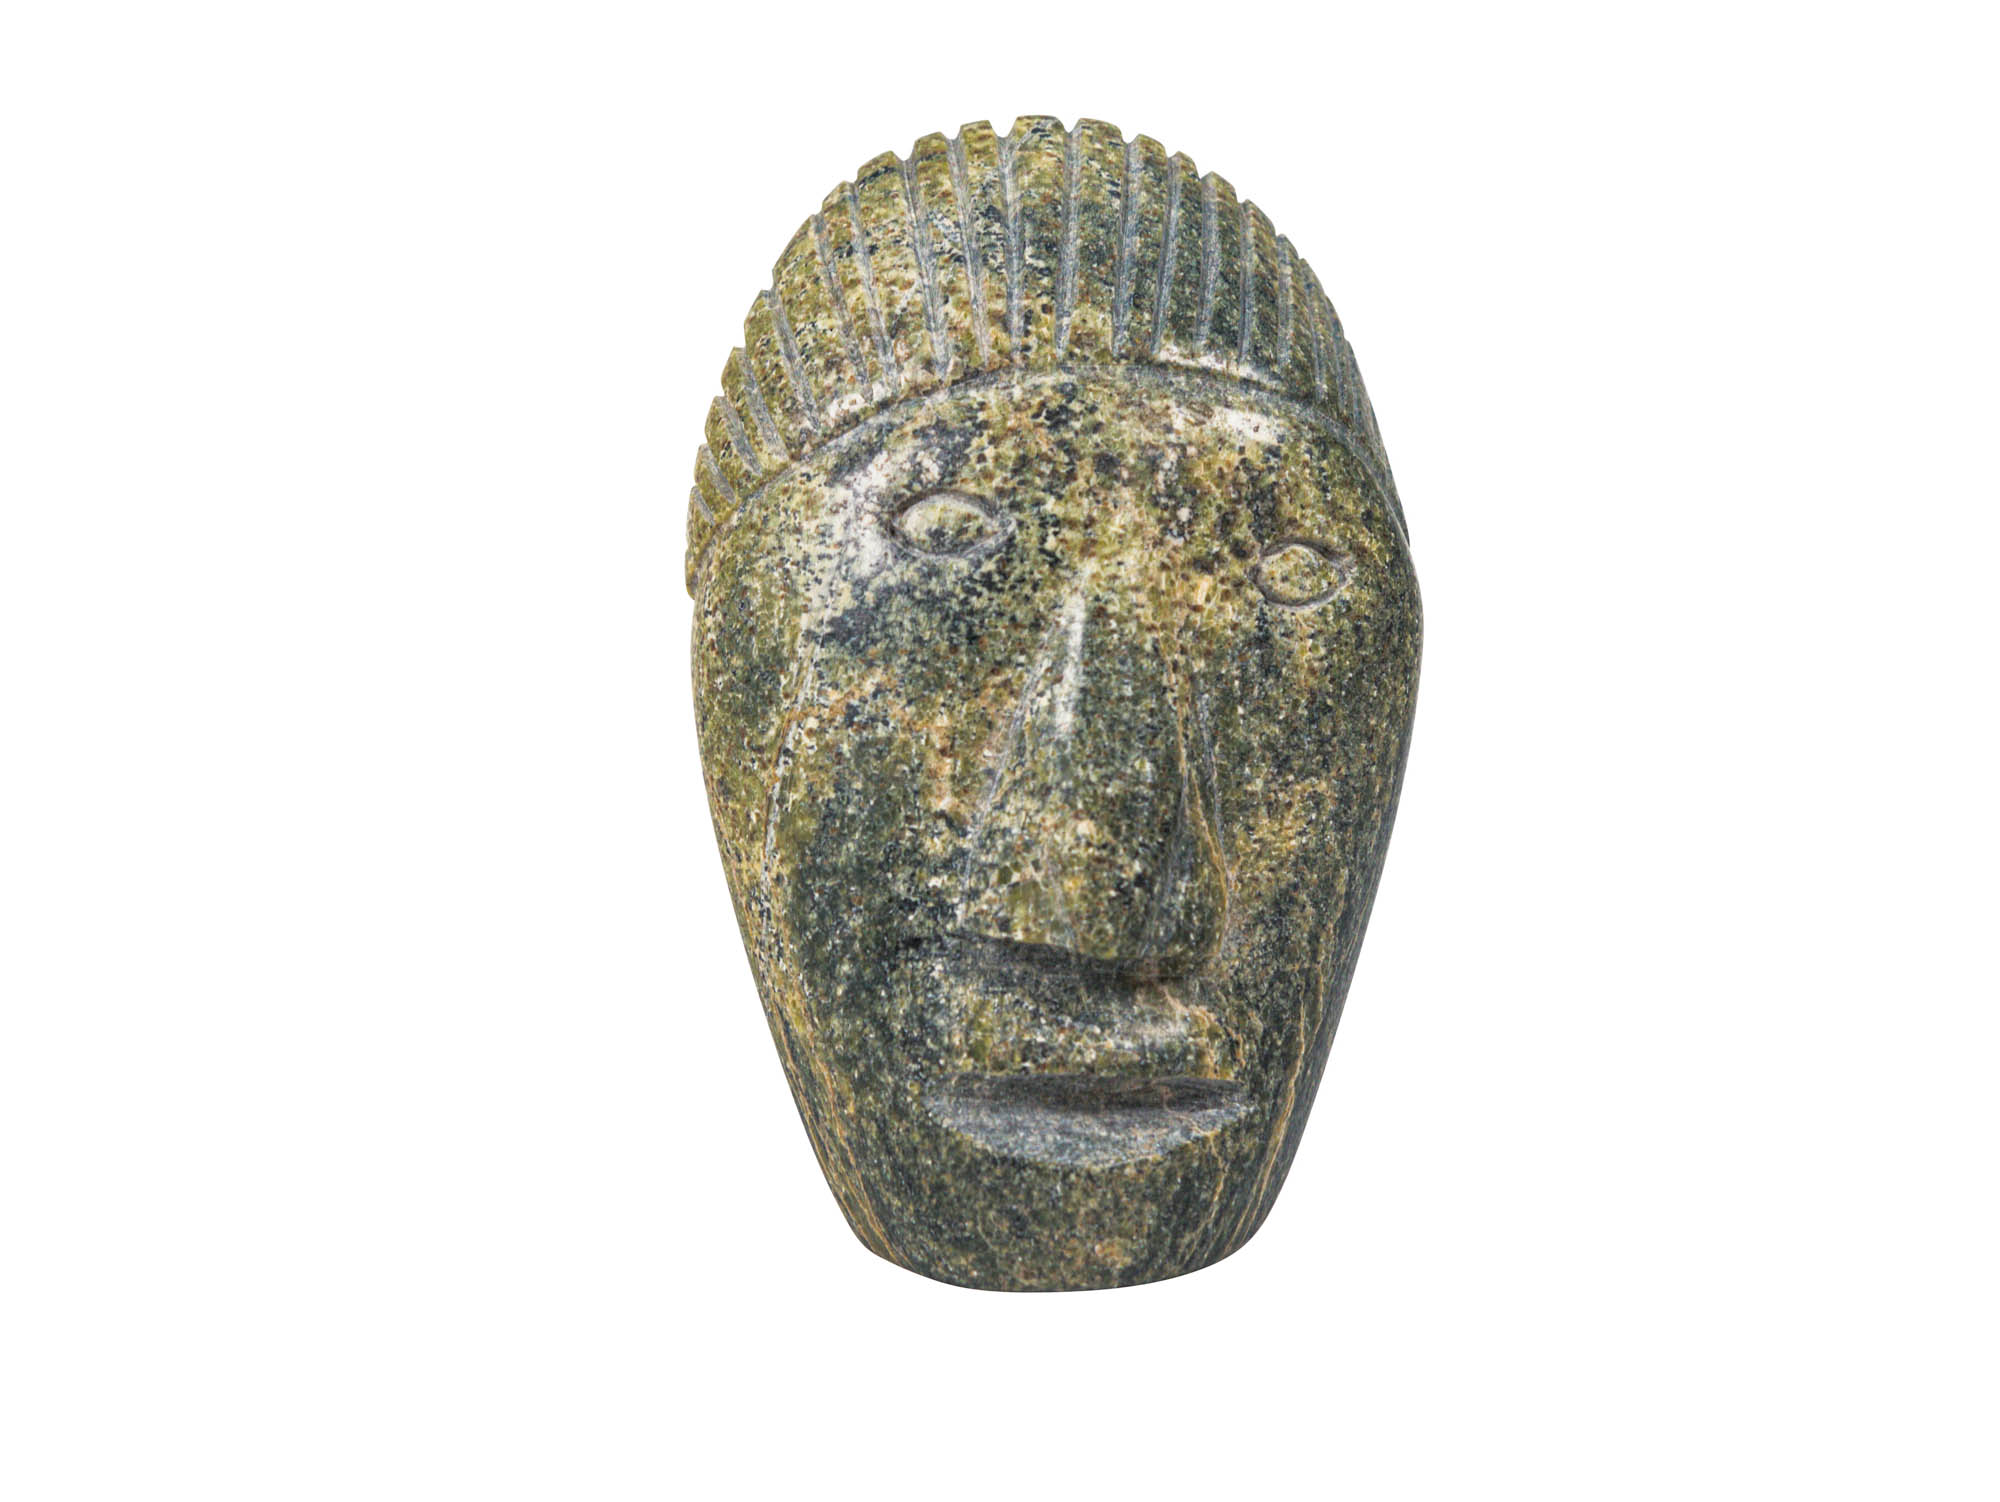 Inuit Soapstone Carving: Mask: Gallery Item - 44-G11 (10URM1)